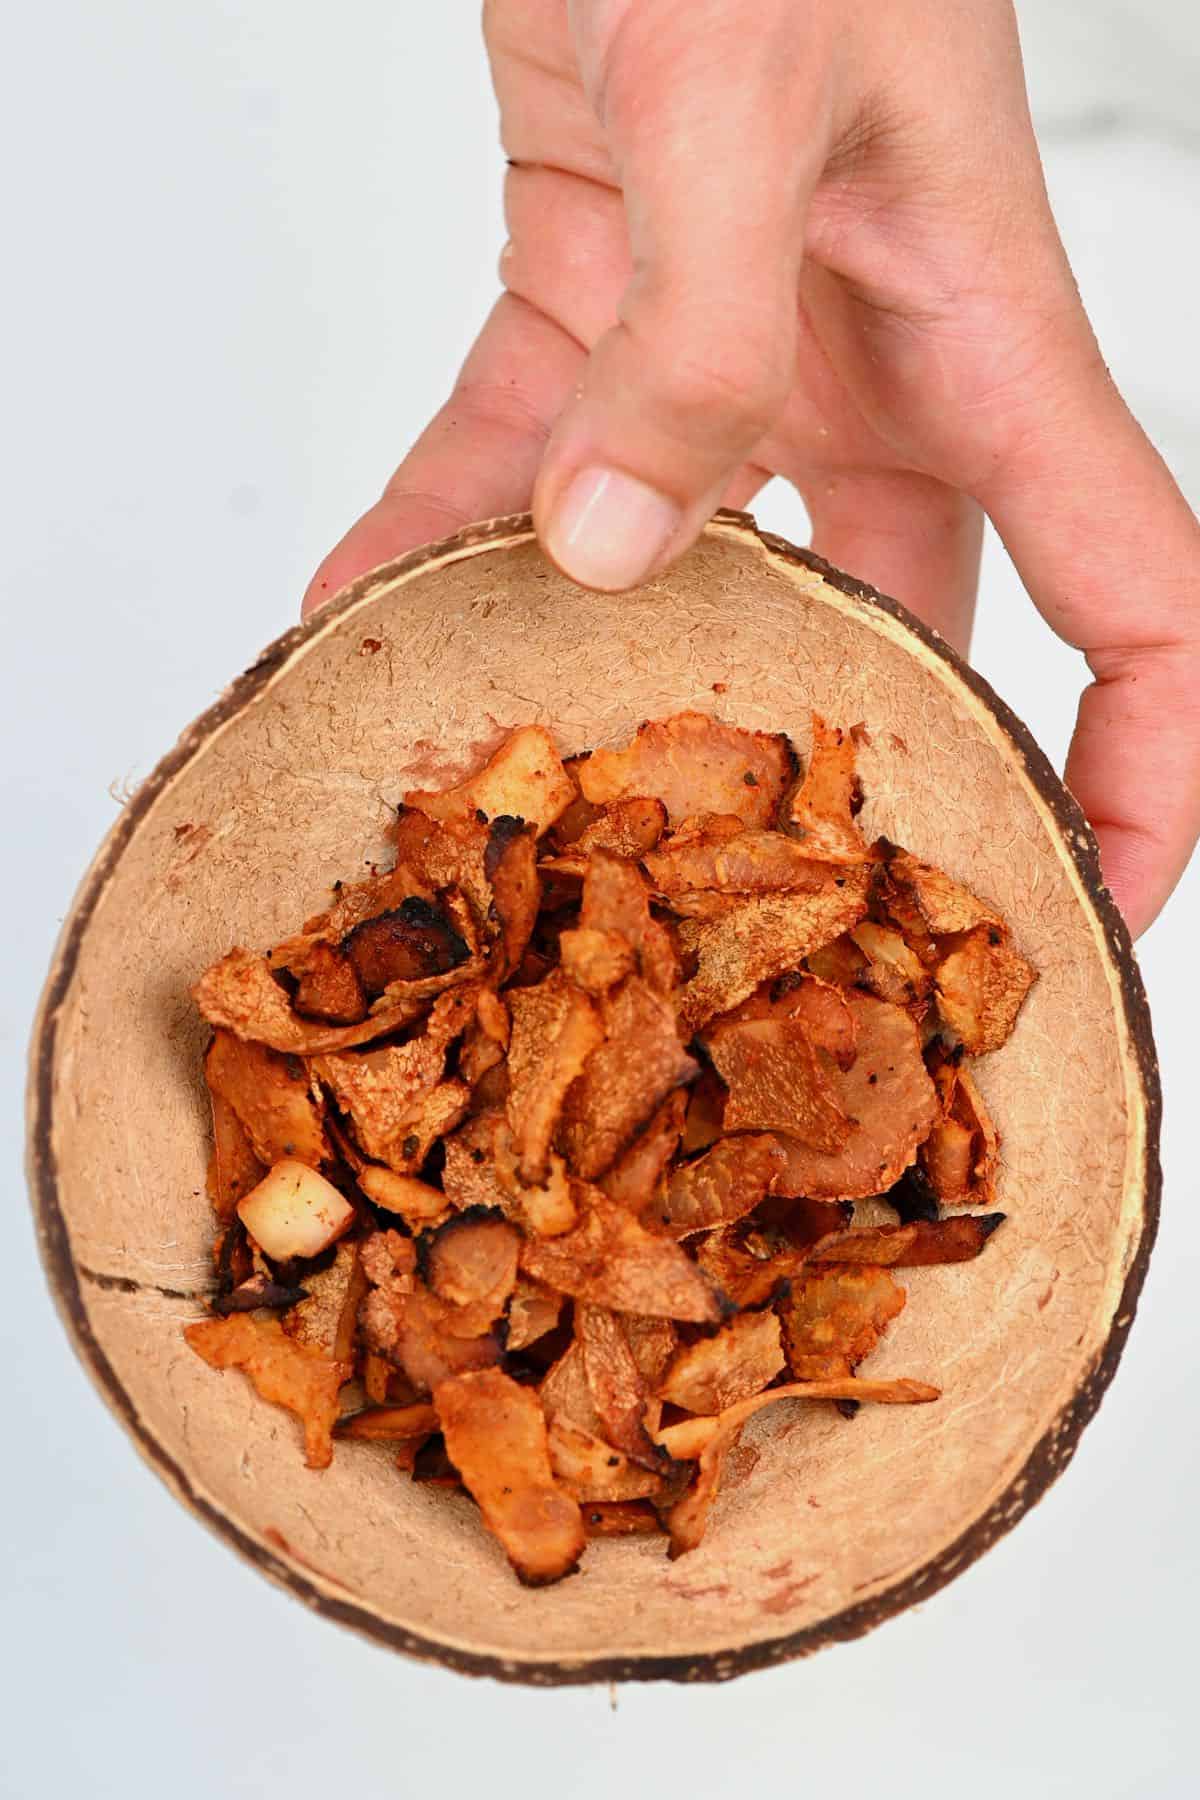 Vegan coconut bacon in a bowl